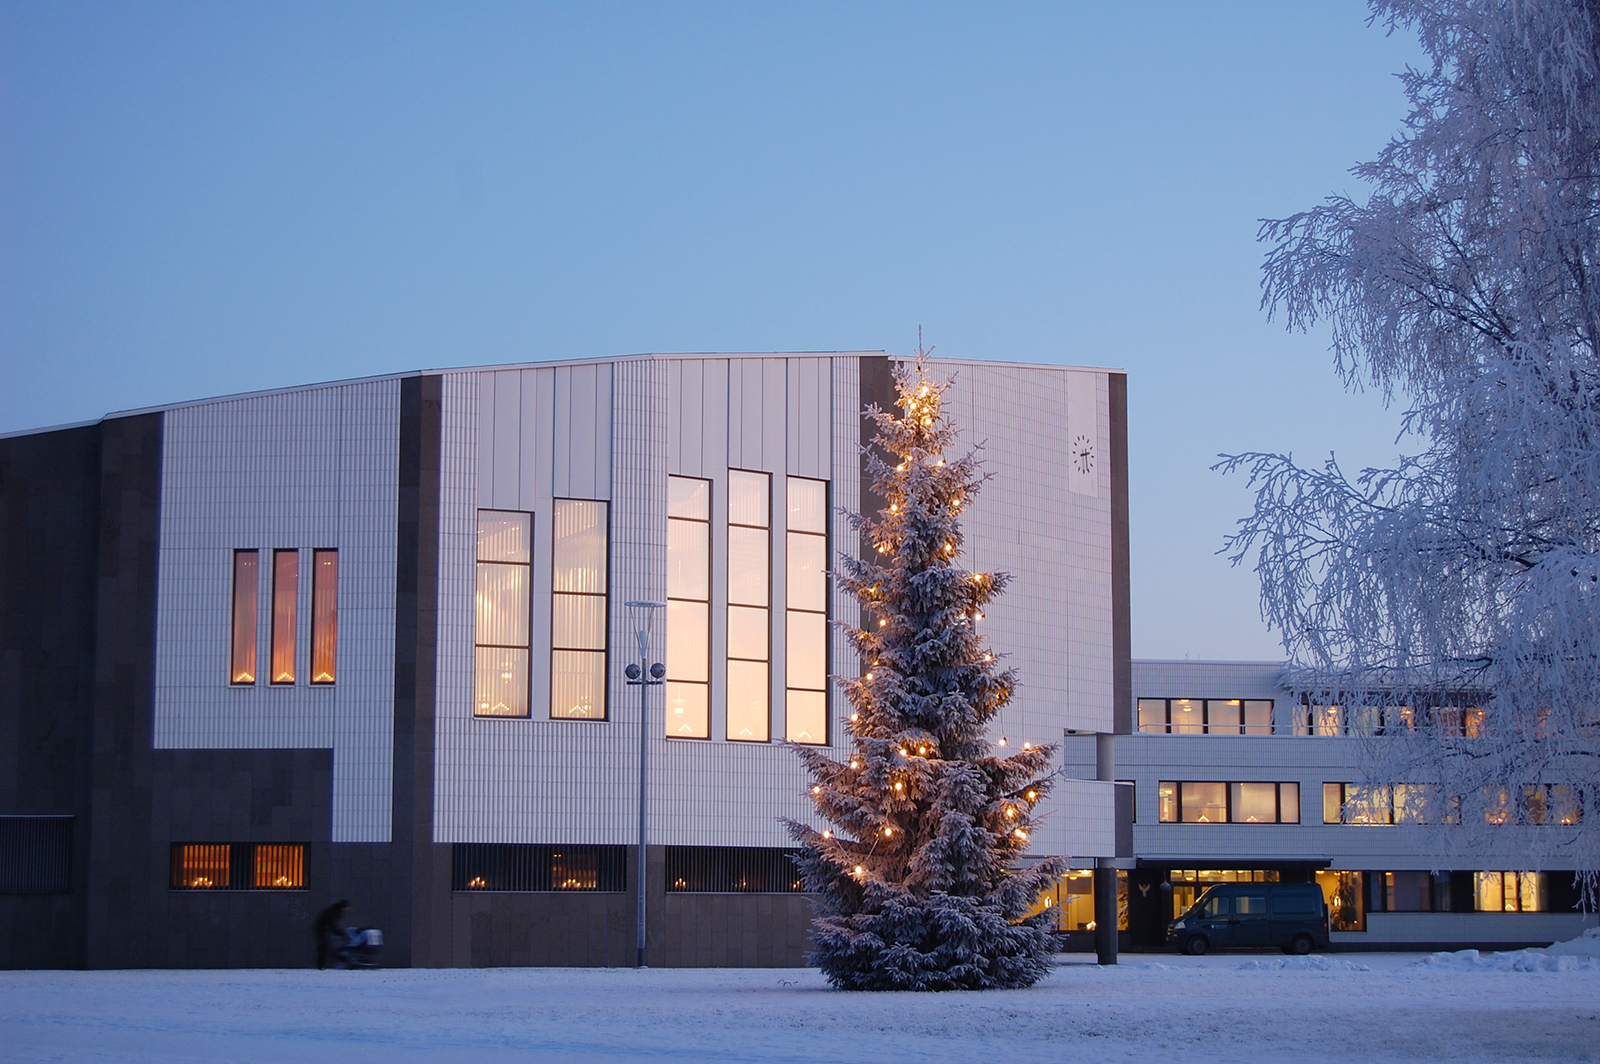 Rovaniemi Town Hall designed by Alvar Aalto